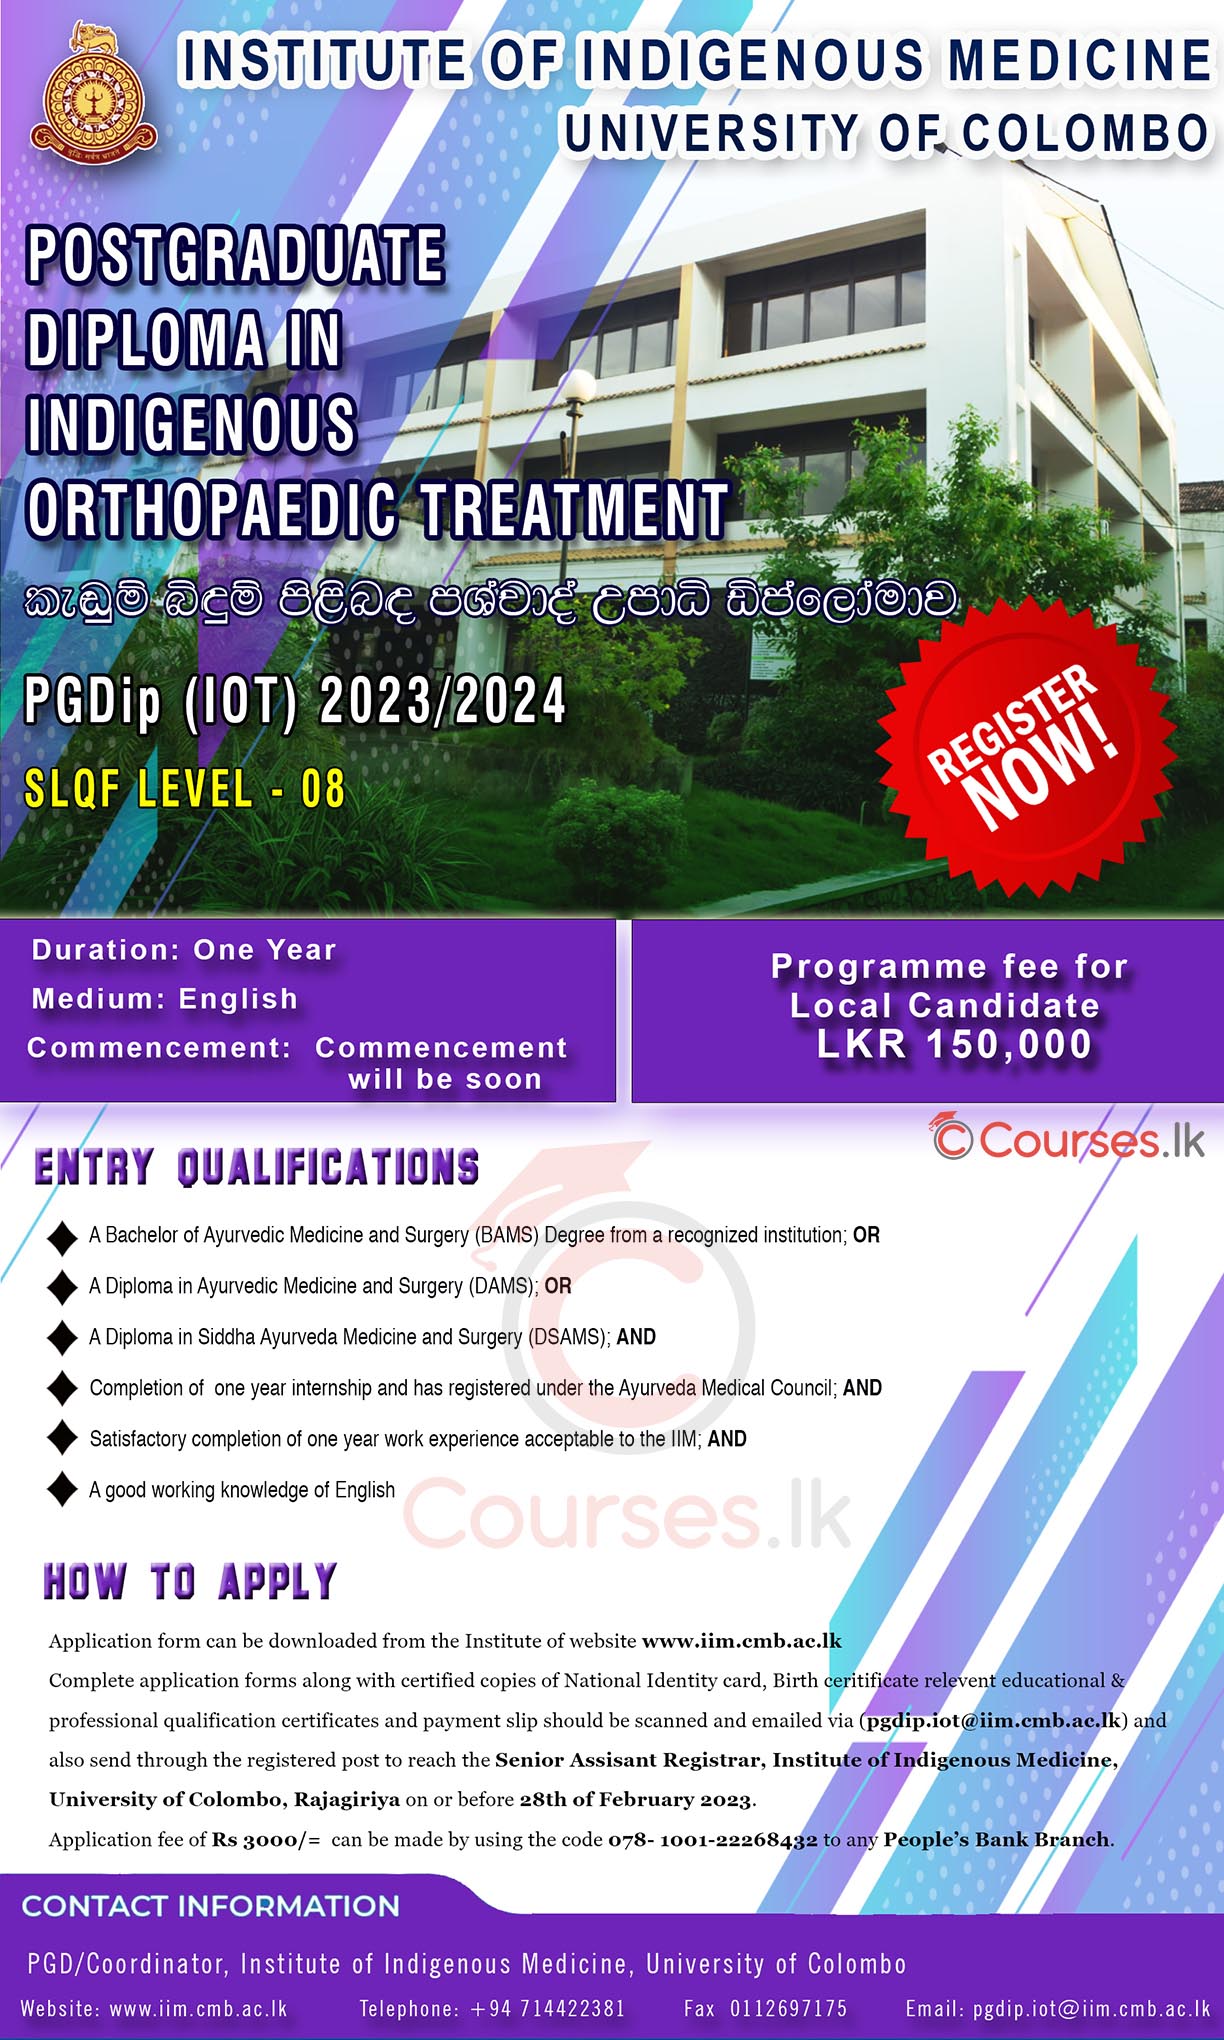 Postgraduate Diploma in Indigenous Orthopedic Treatment (2023) - University of Colombo